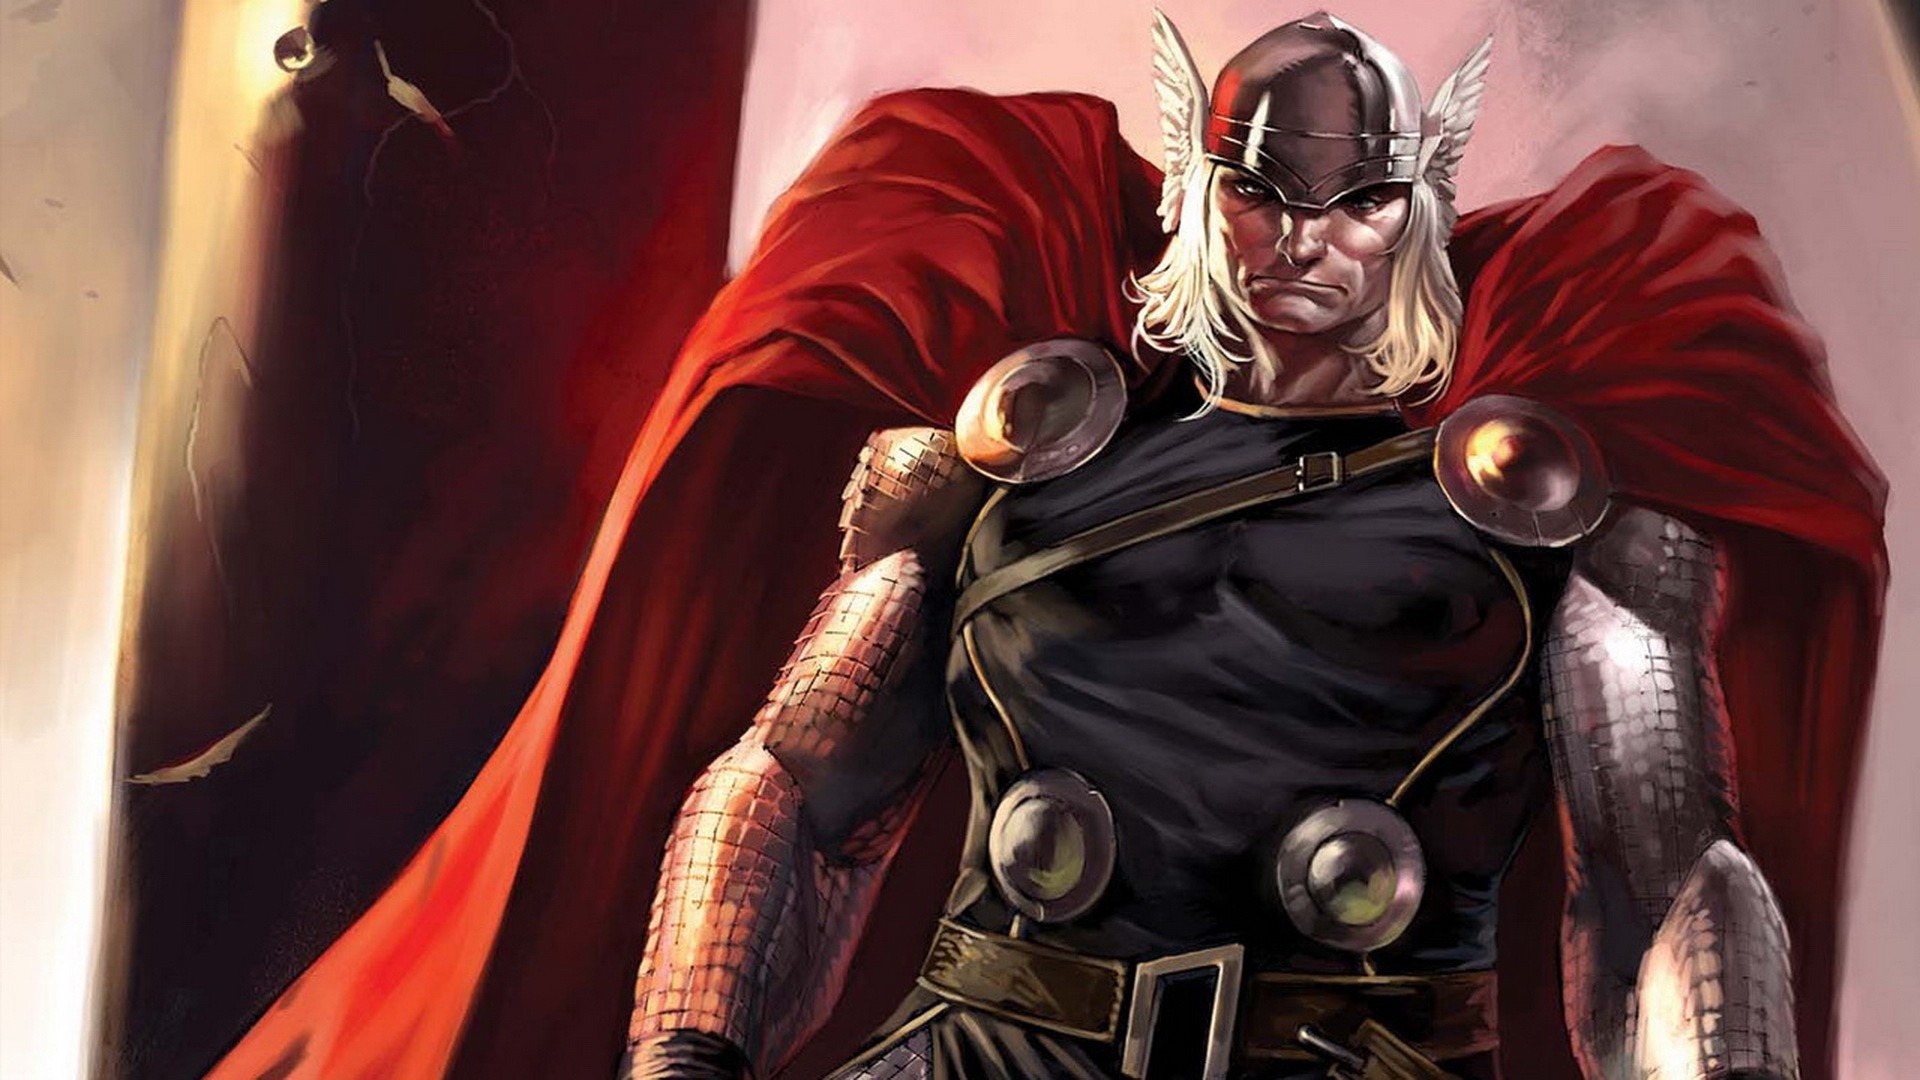 General 1920x1080 comics Thor fantasy men helmet cape armor fantasy art comic art men superhero